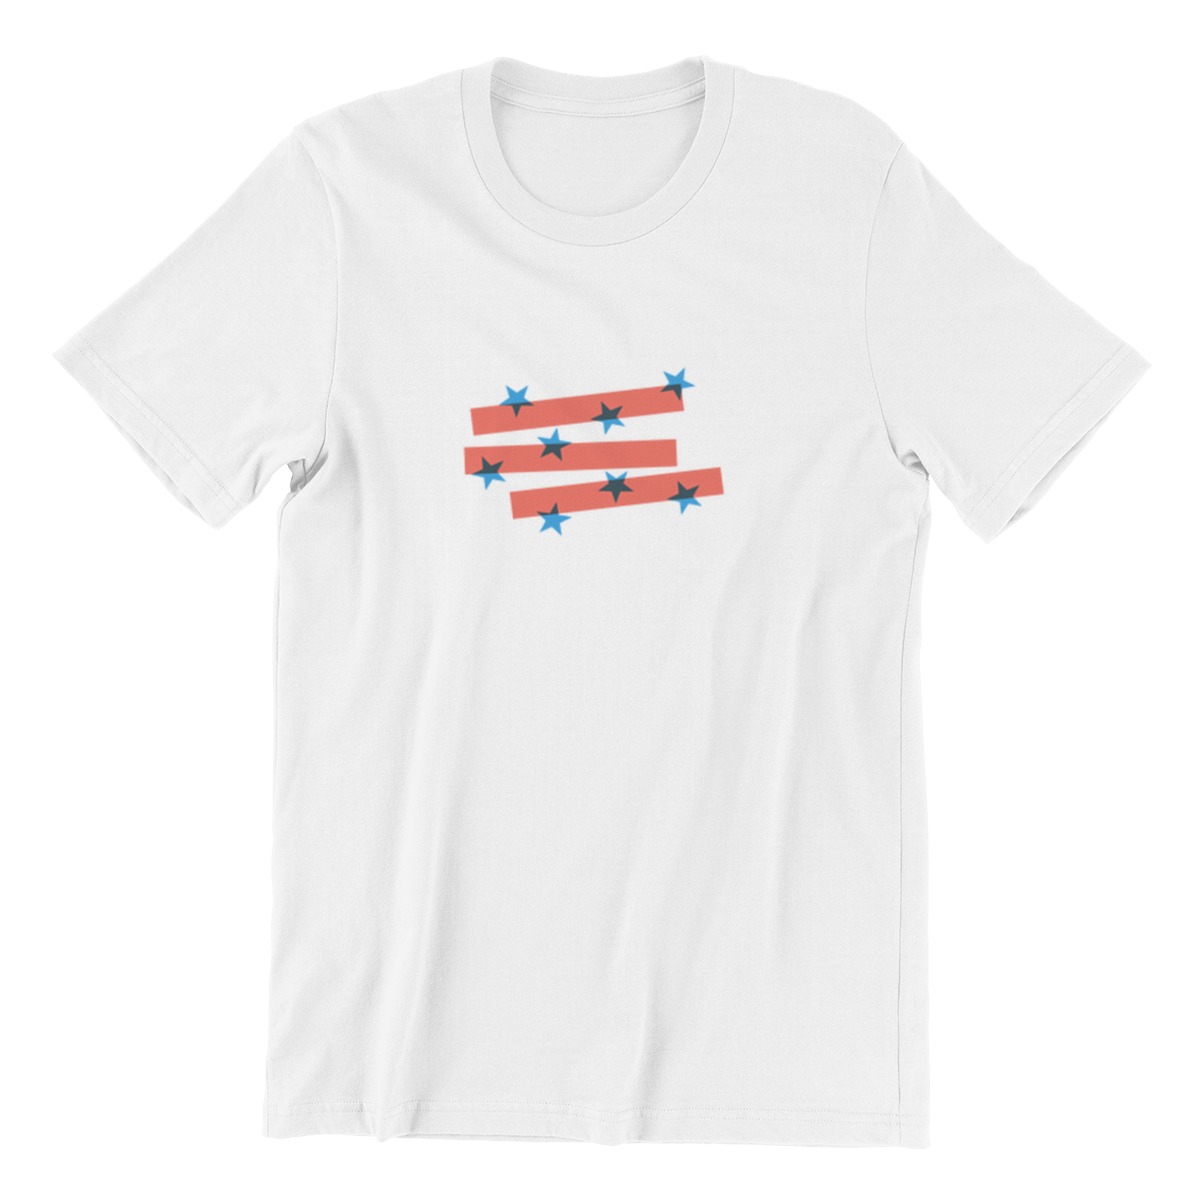 2020 USA Presidential Men's T Shirt Novelty Tops Bitumen Bike Life Tees Clothes Cotton Printed Plus Size Mens Clothes 3305